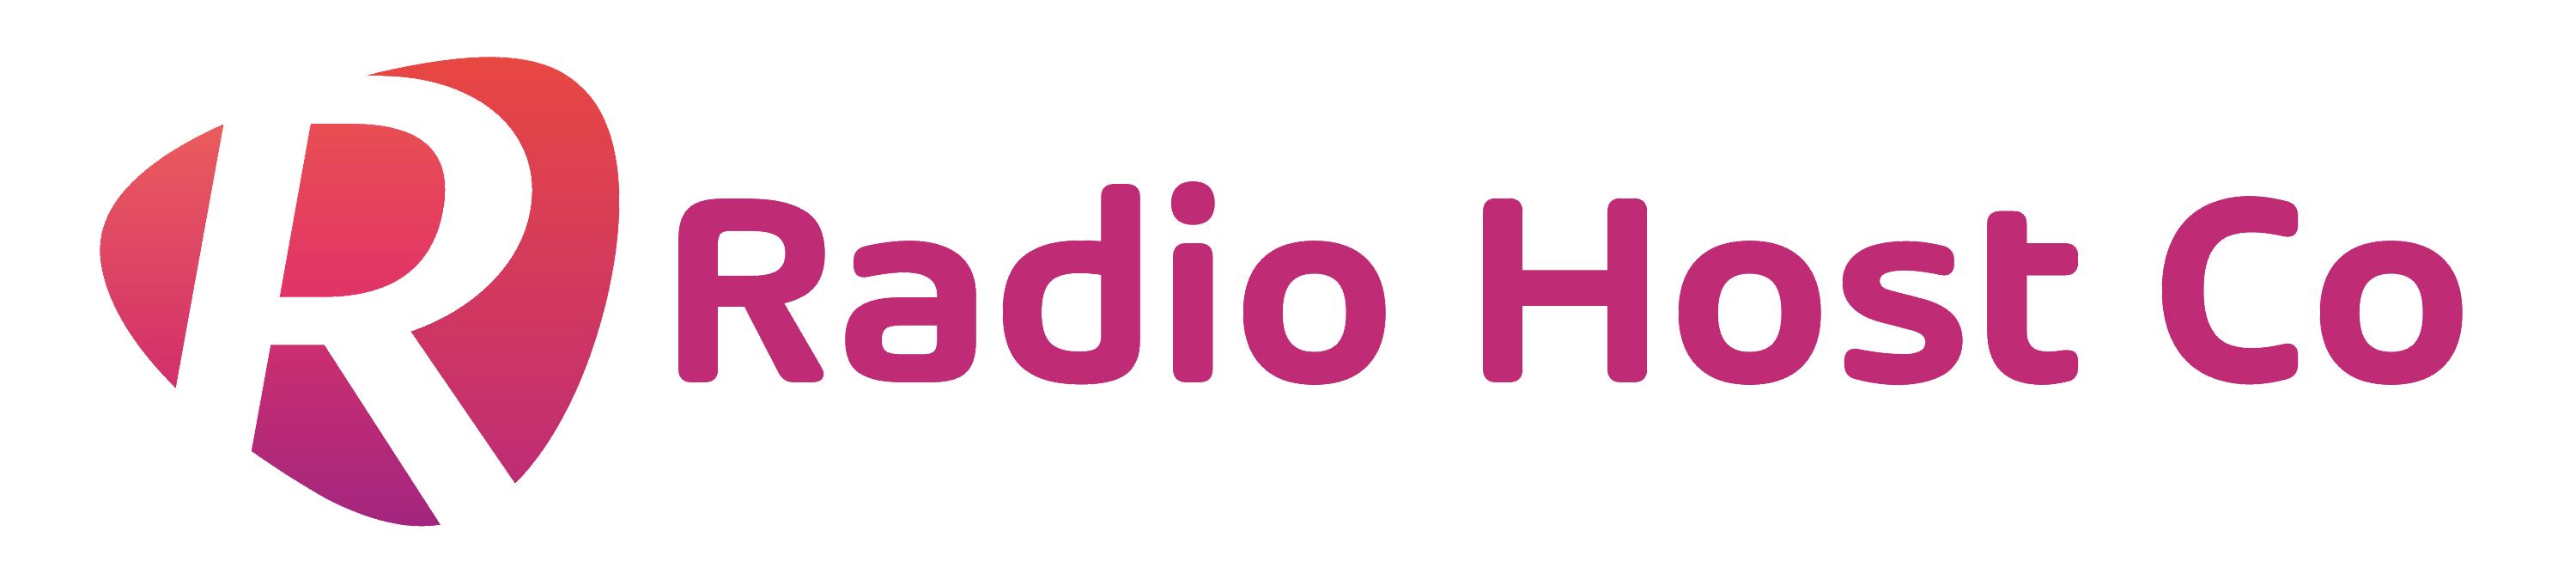 Radio Host Co